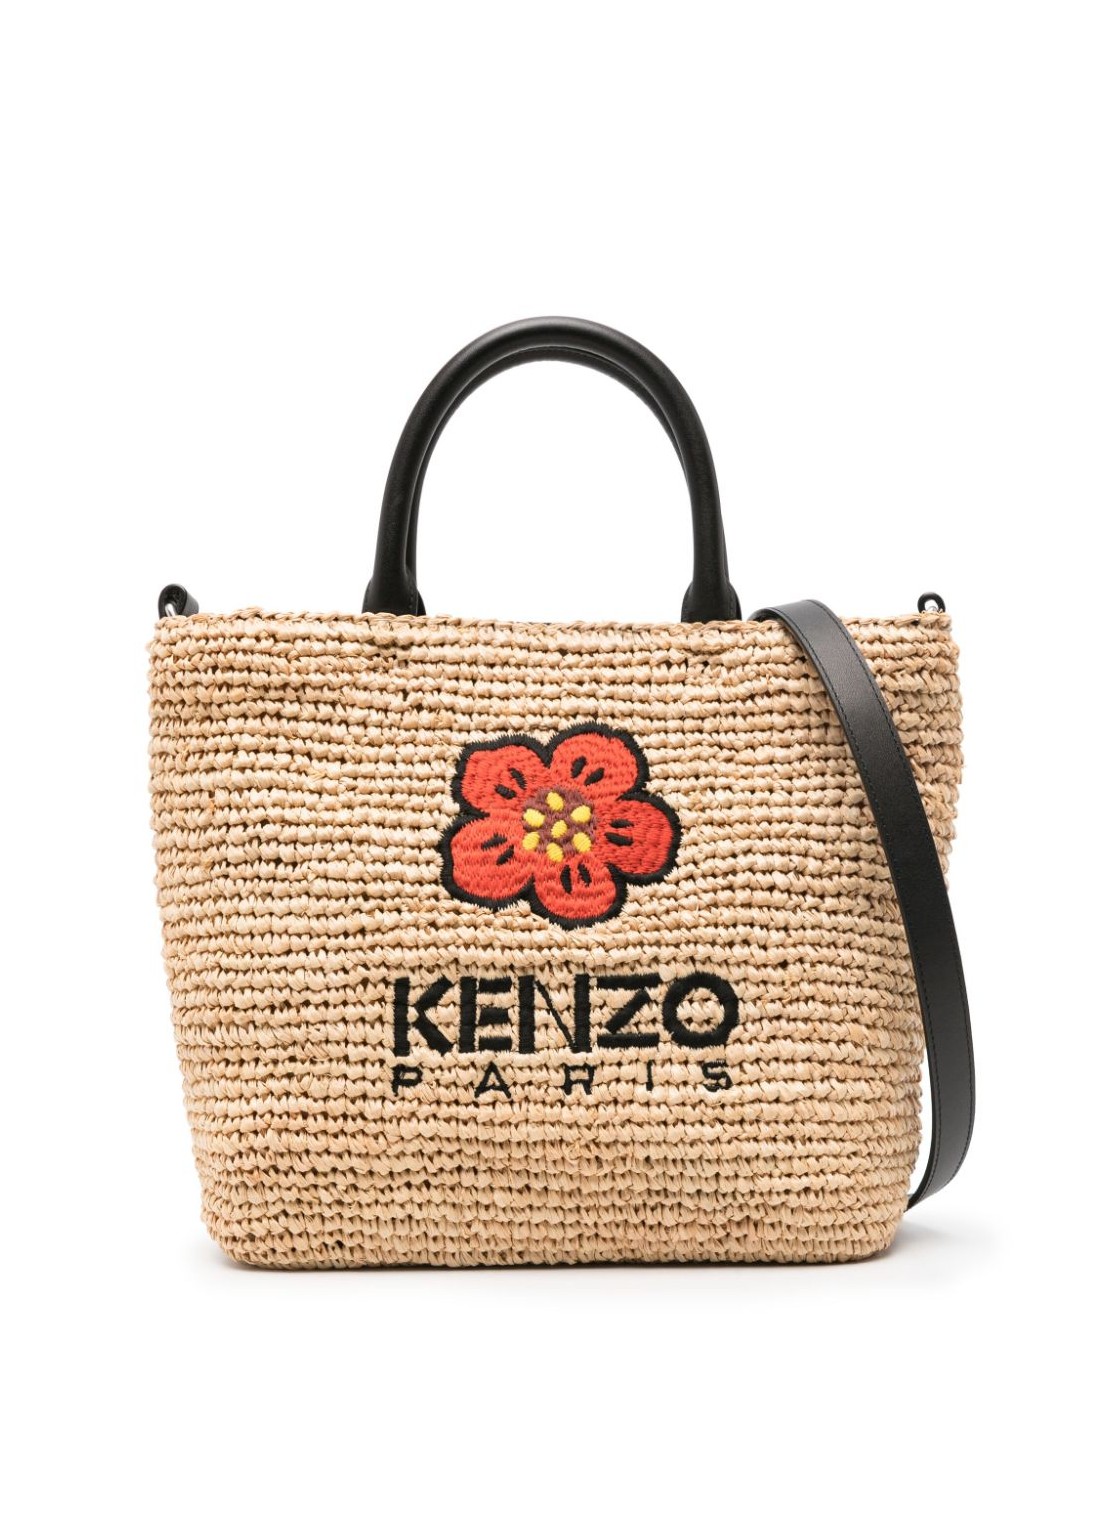 Handbag kenzo handbag woman sac shopping / tote fe52sa560f02 99 talla negro
 